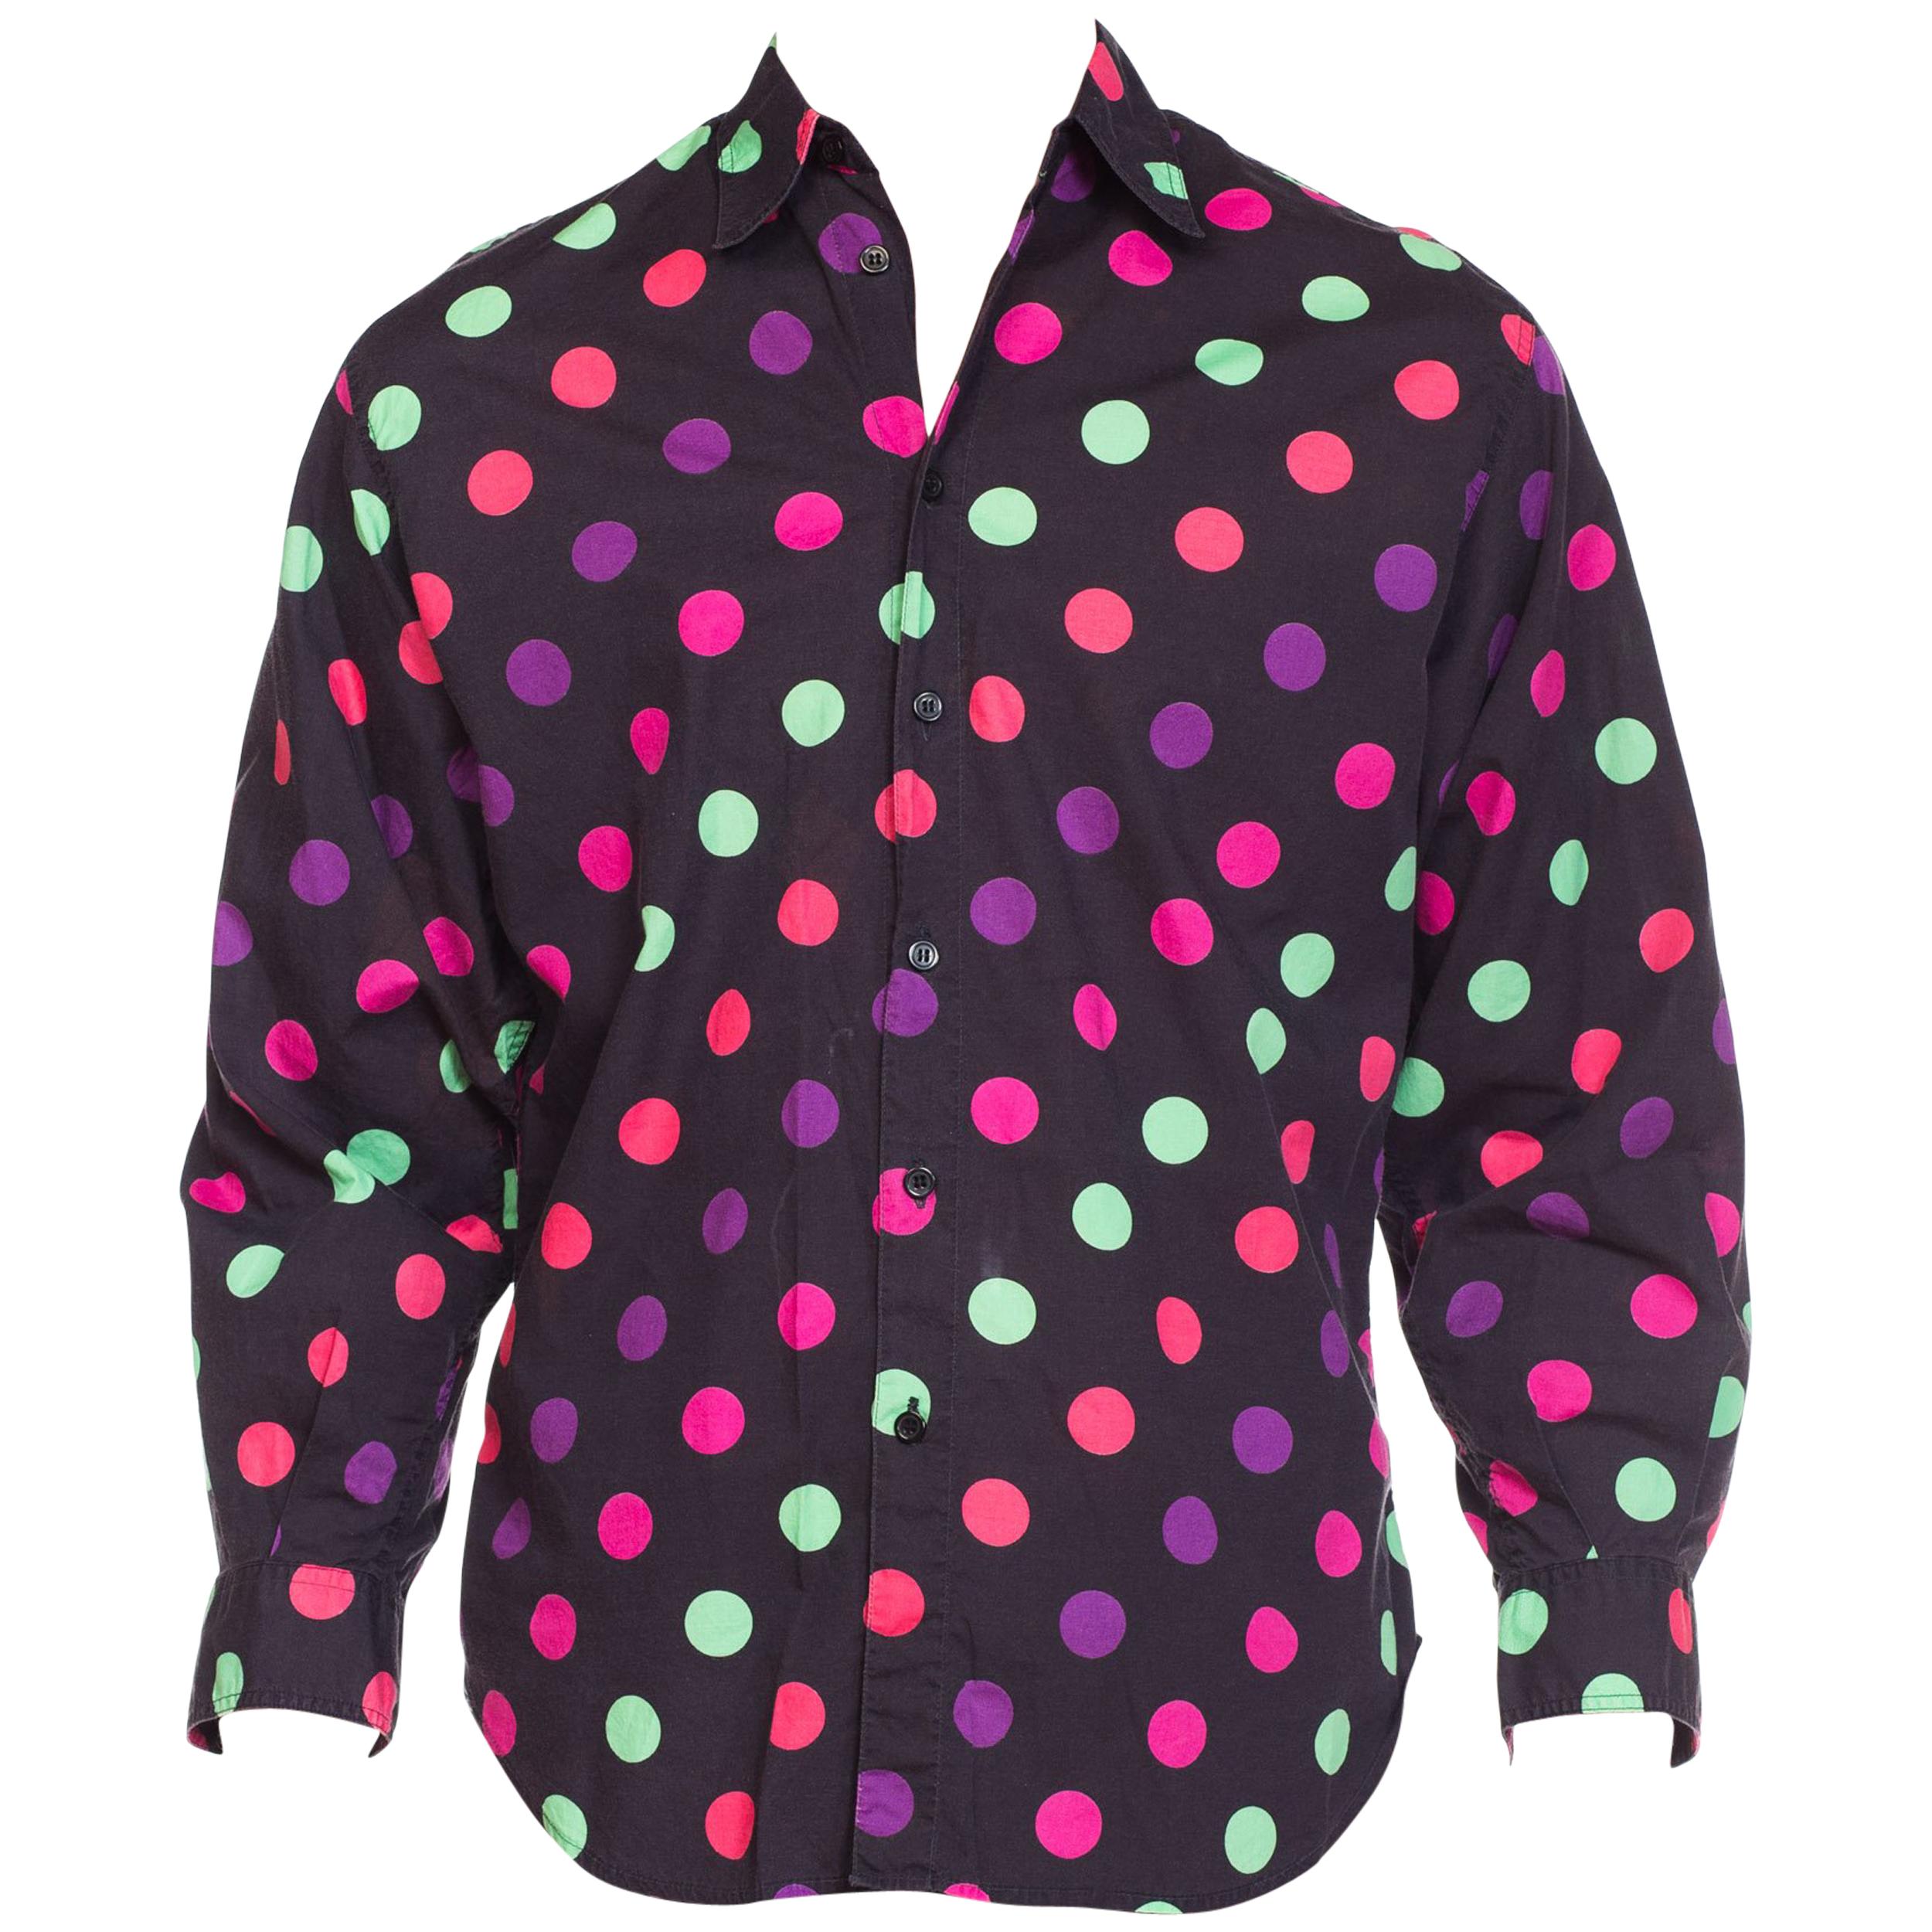 1990S VERSUS BY GIANNI VERSACE Cotton Men's Neon Polka Dot Shirt Sz 44